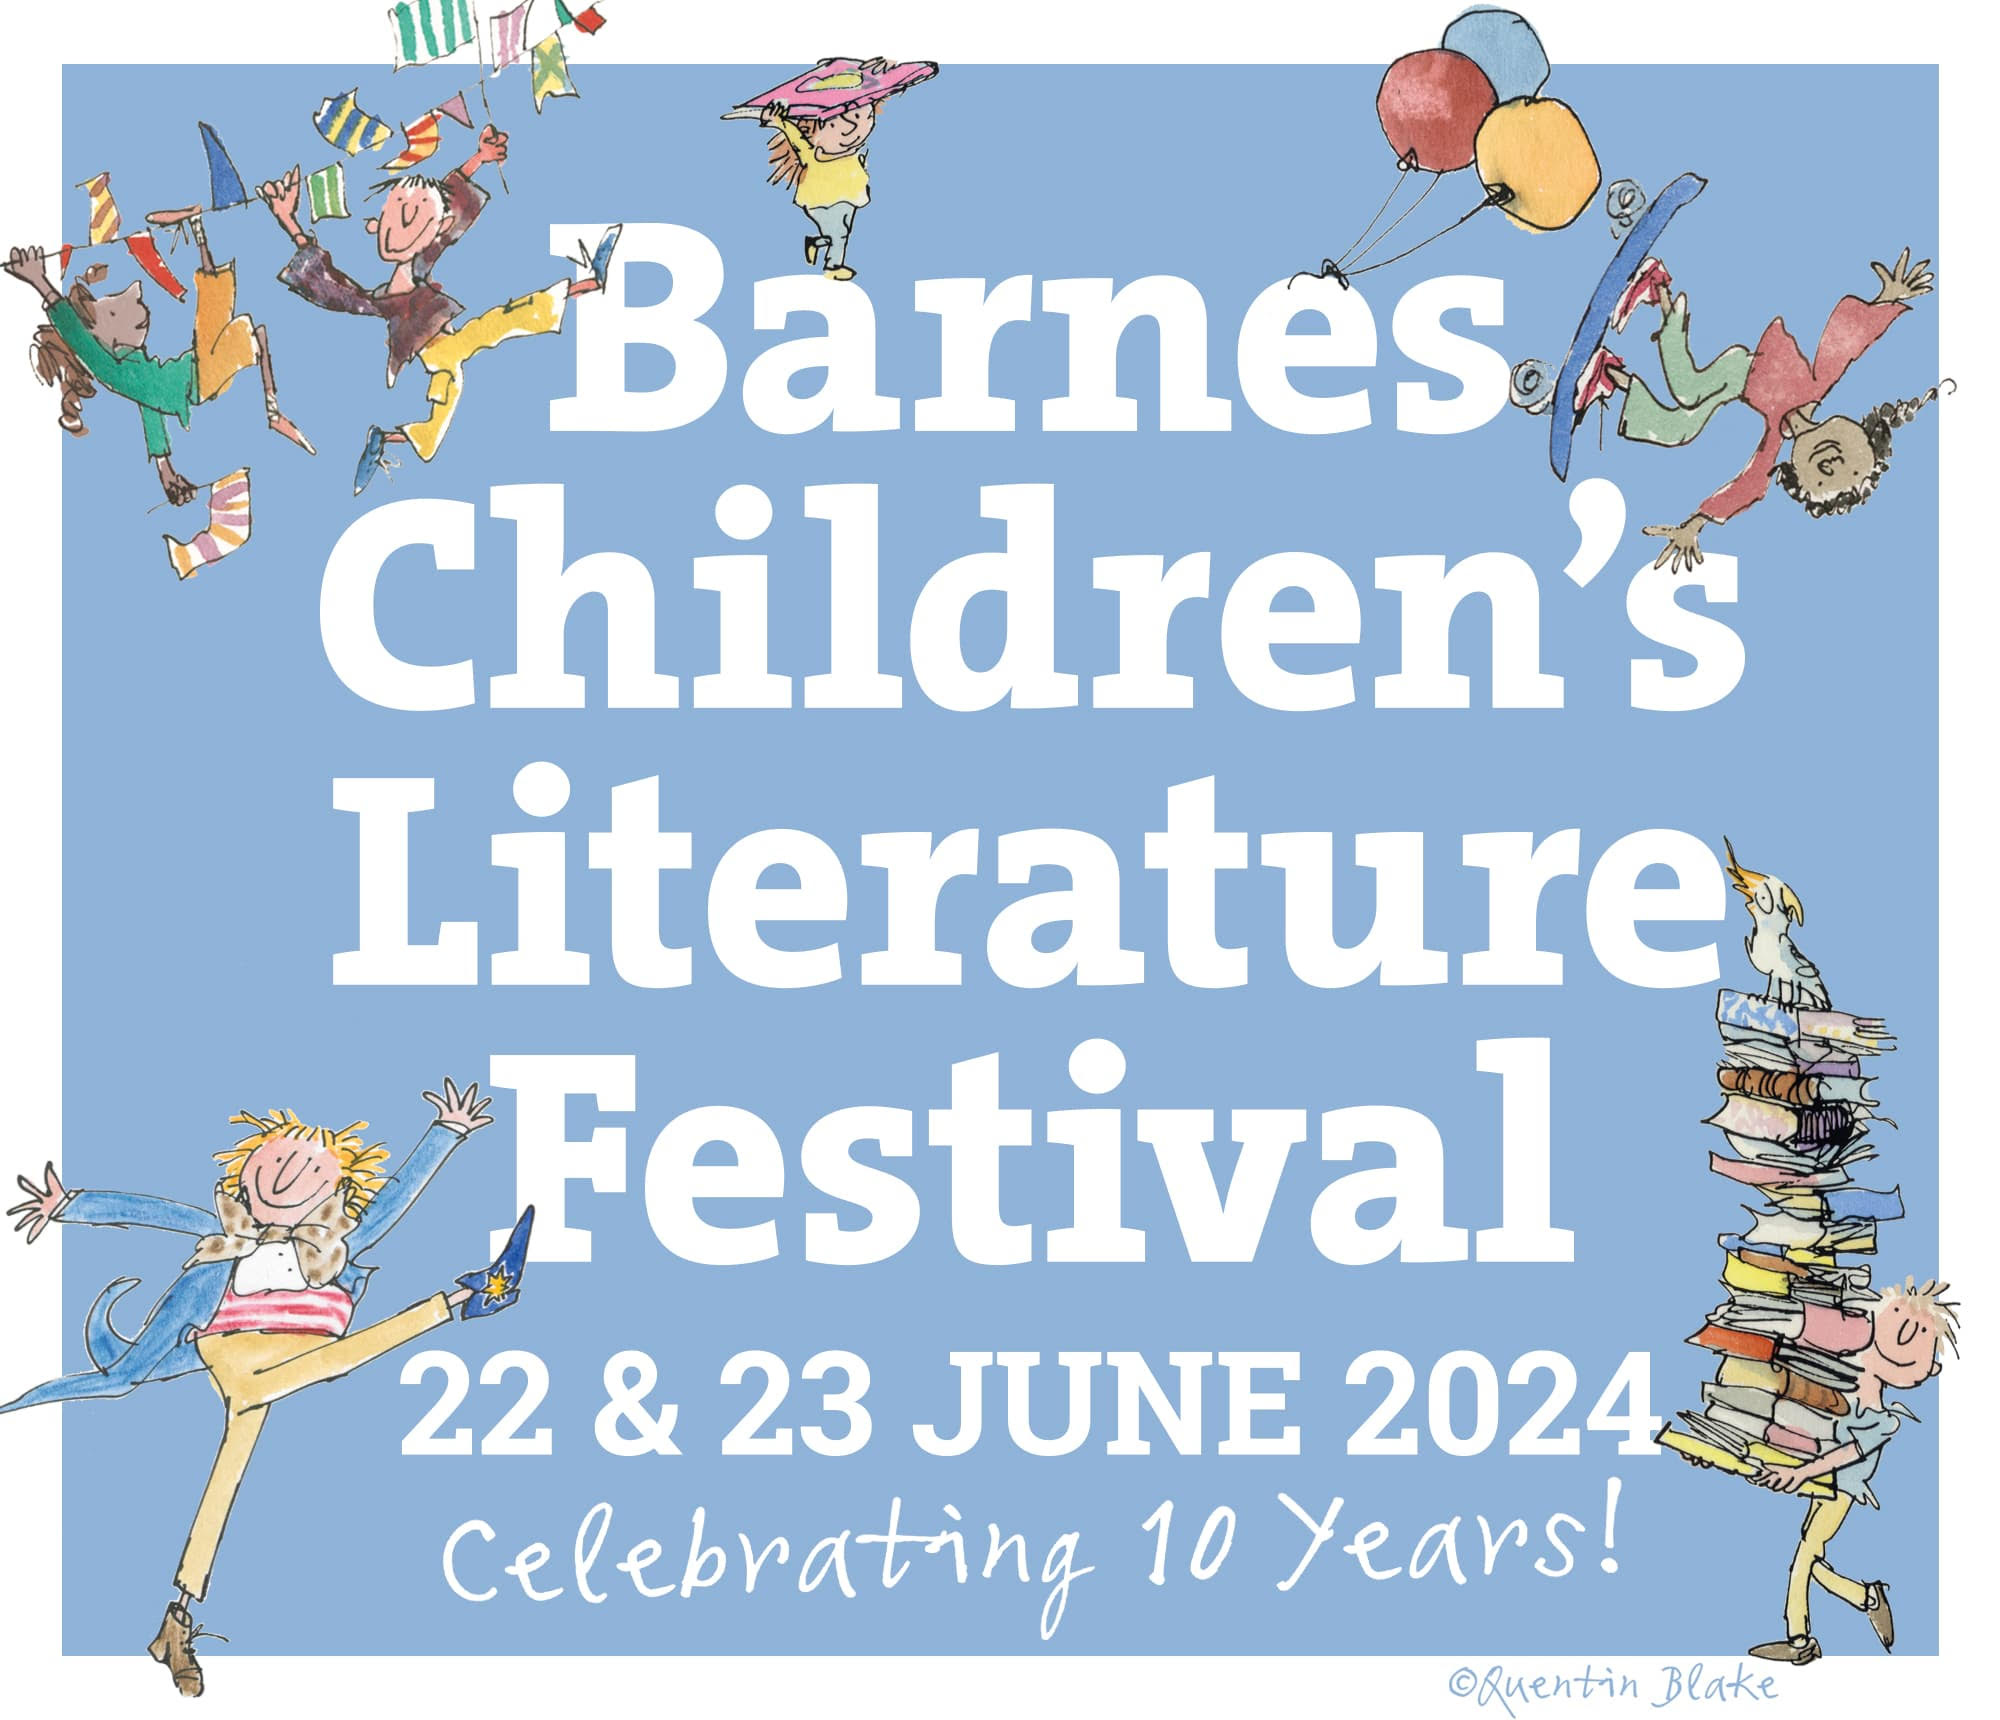  The Week Junior partners with Barnes Children's Literature Festival 